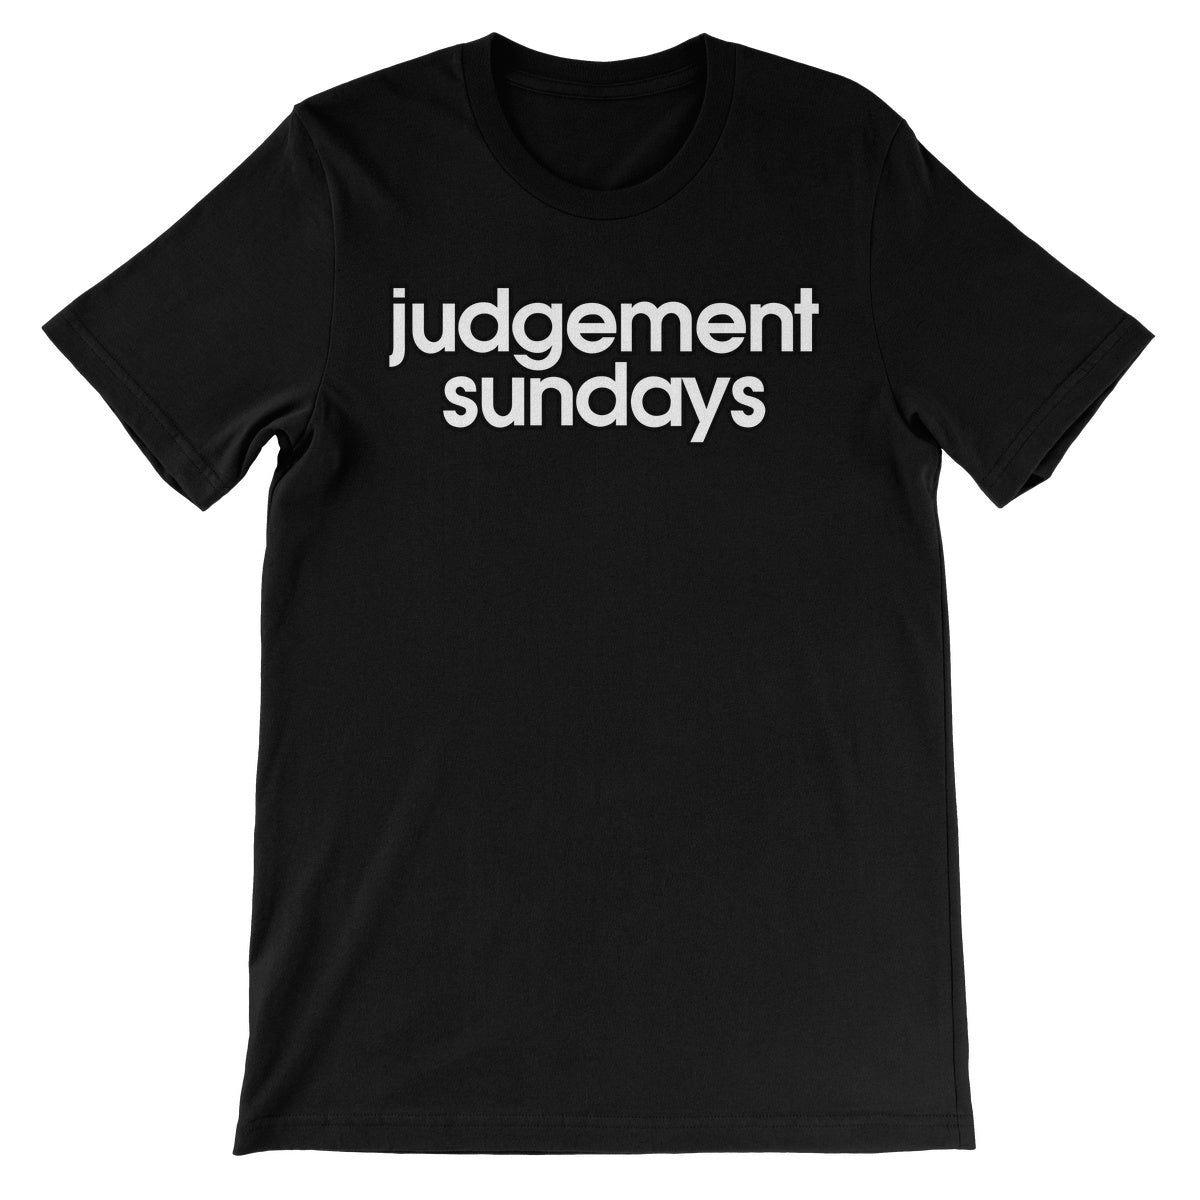 Judgement Sundays Unisex Short Sleeve T-Shirt